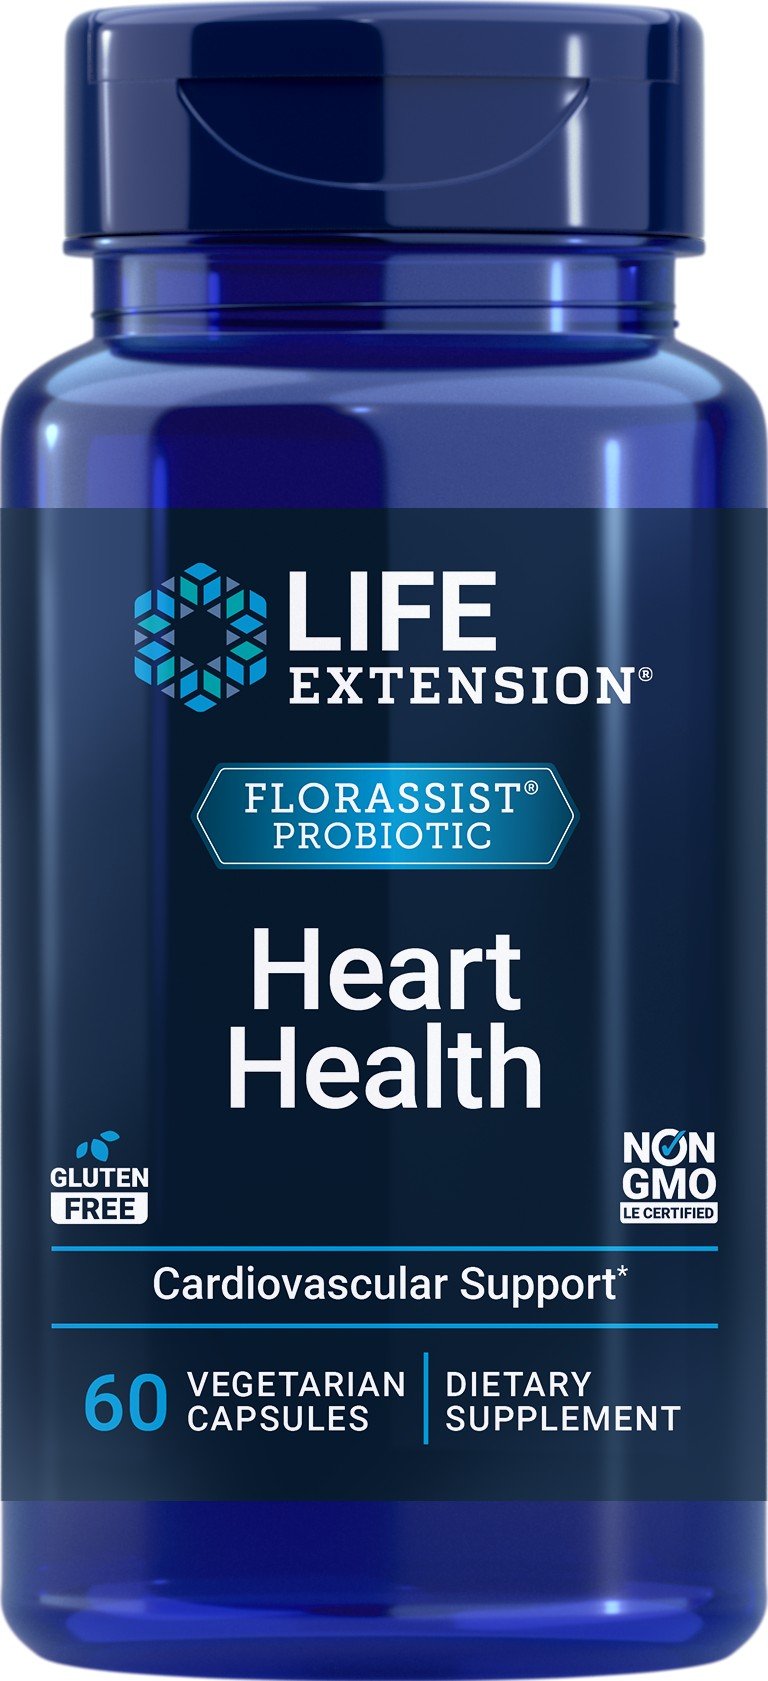 Life Extension FlorAssist Heart Health Probiotic 60 Tablet